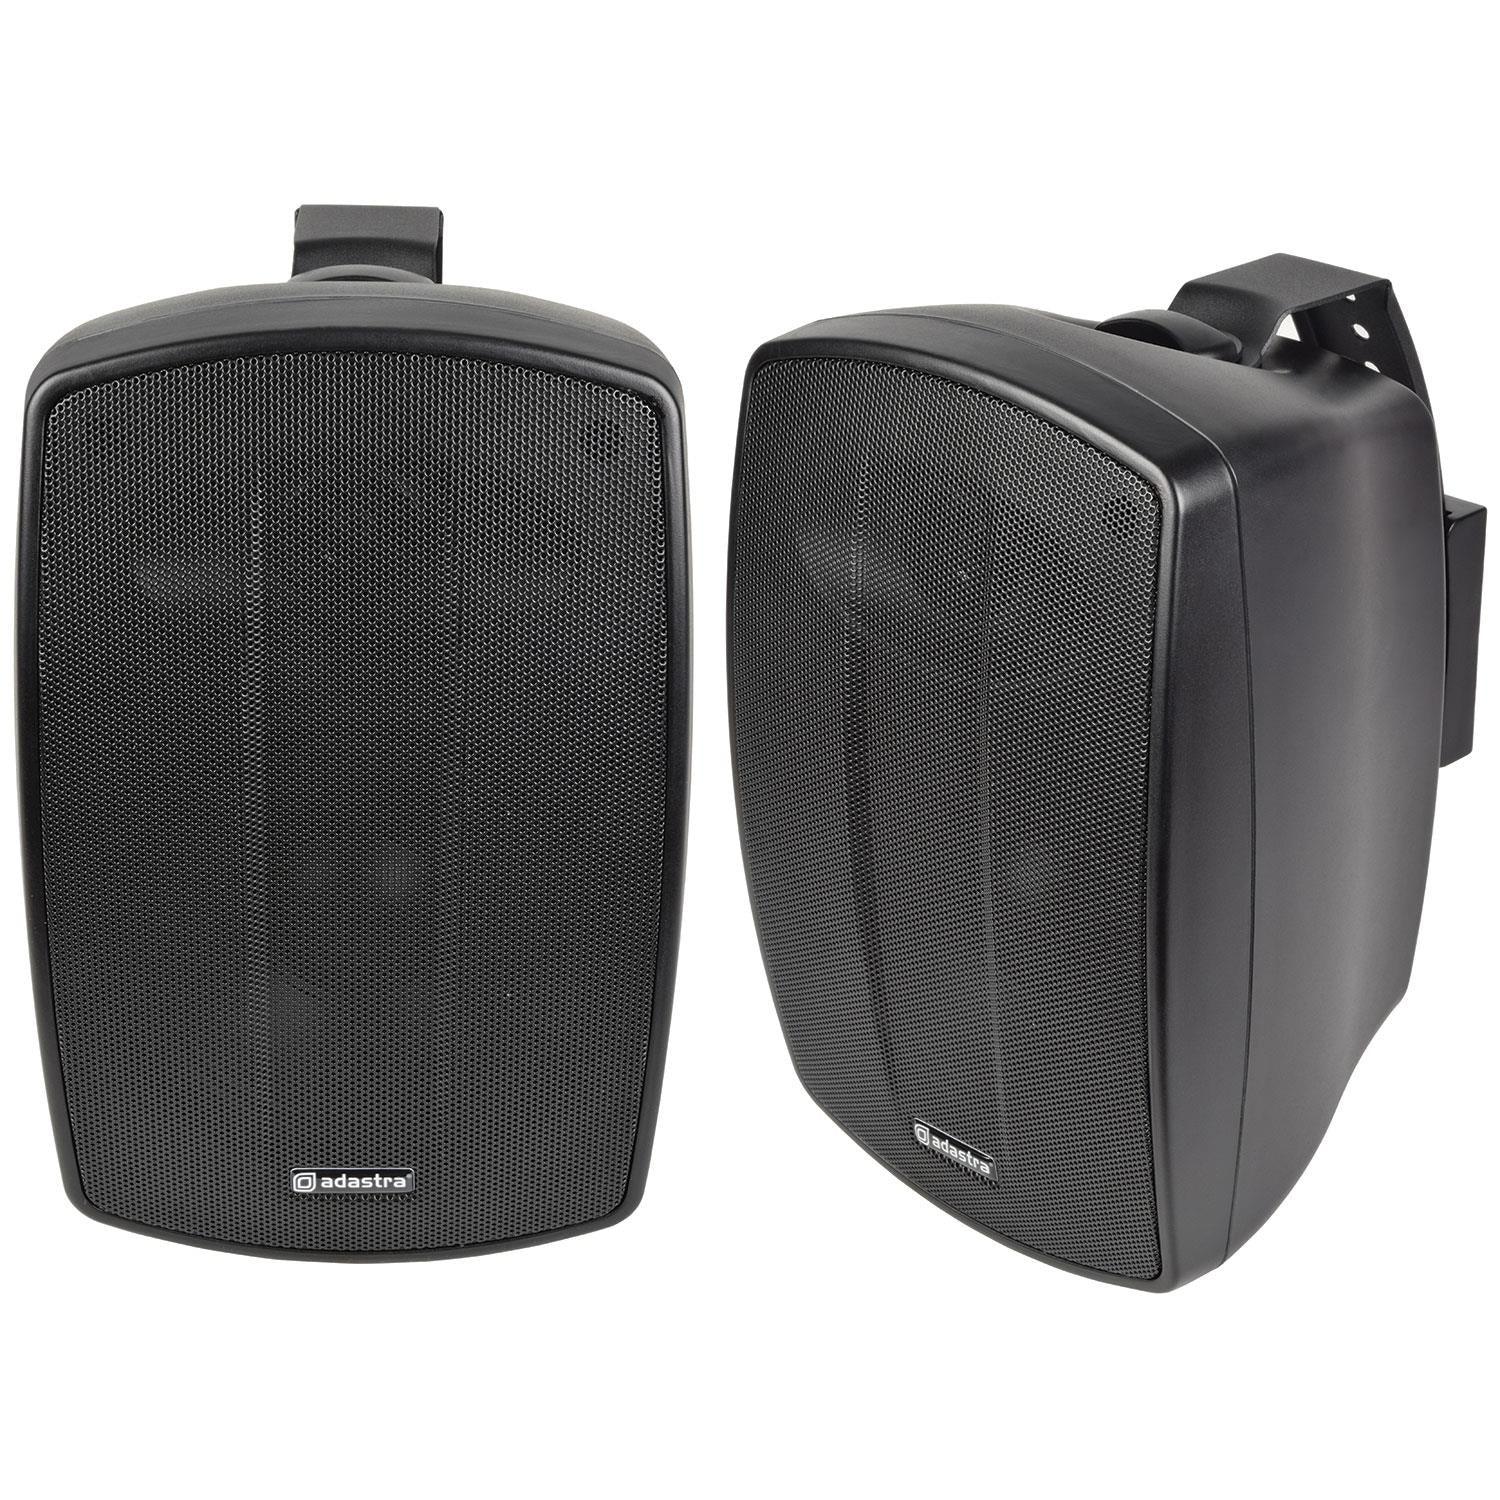 Adastra BH5 5.25" Black Indoor / Outdoor Background Speakers - DY Pro Audio